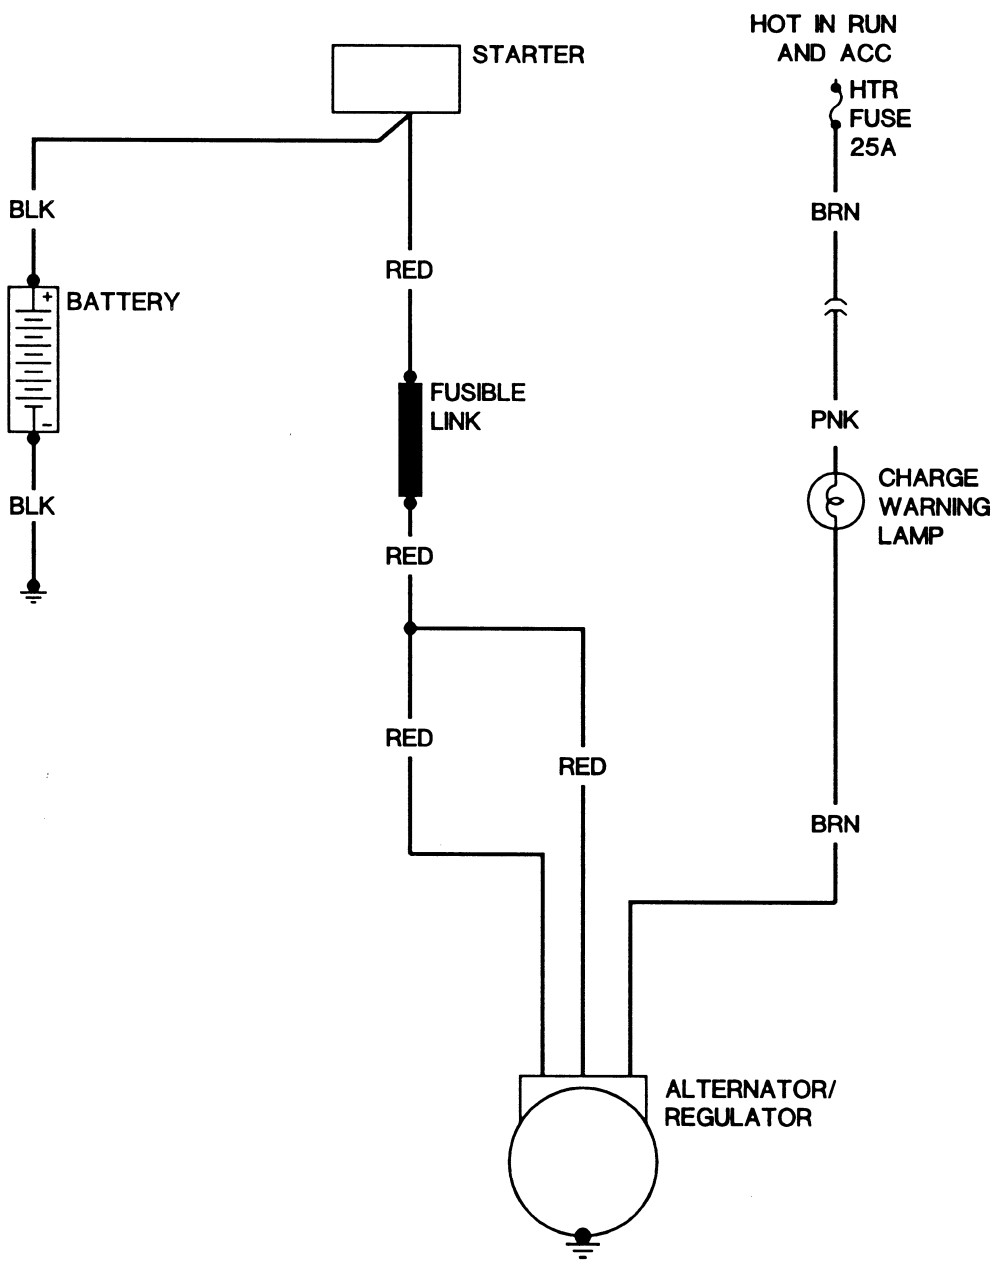 Repair Guides Wiring Diagrams Wiring Diagrams Autozone 2002 GMC Sierra Stereo Wiring Diagram 77 Gmc Wiring Diagram